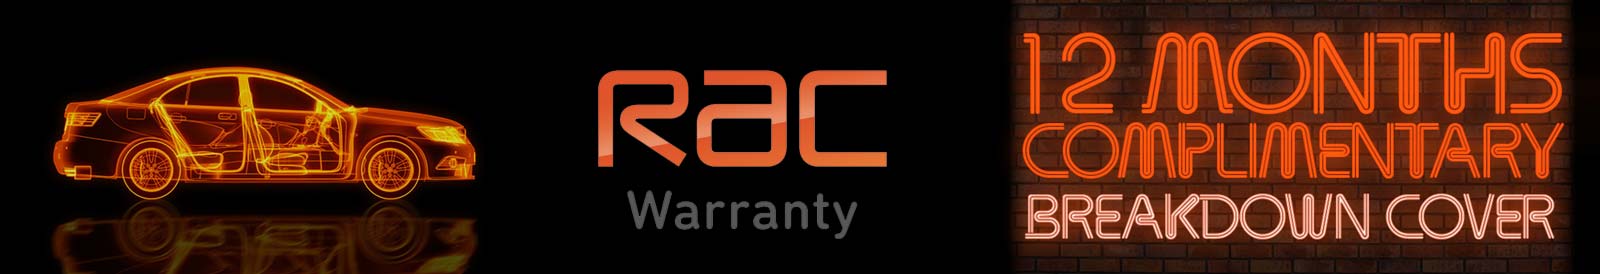 RAC Warranty 12 months free breakdown cover - simon shield cars